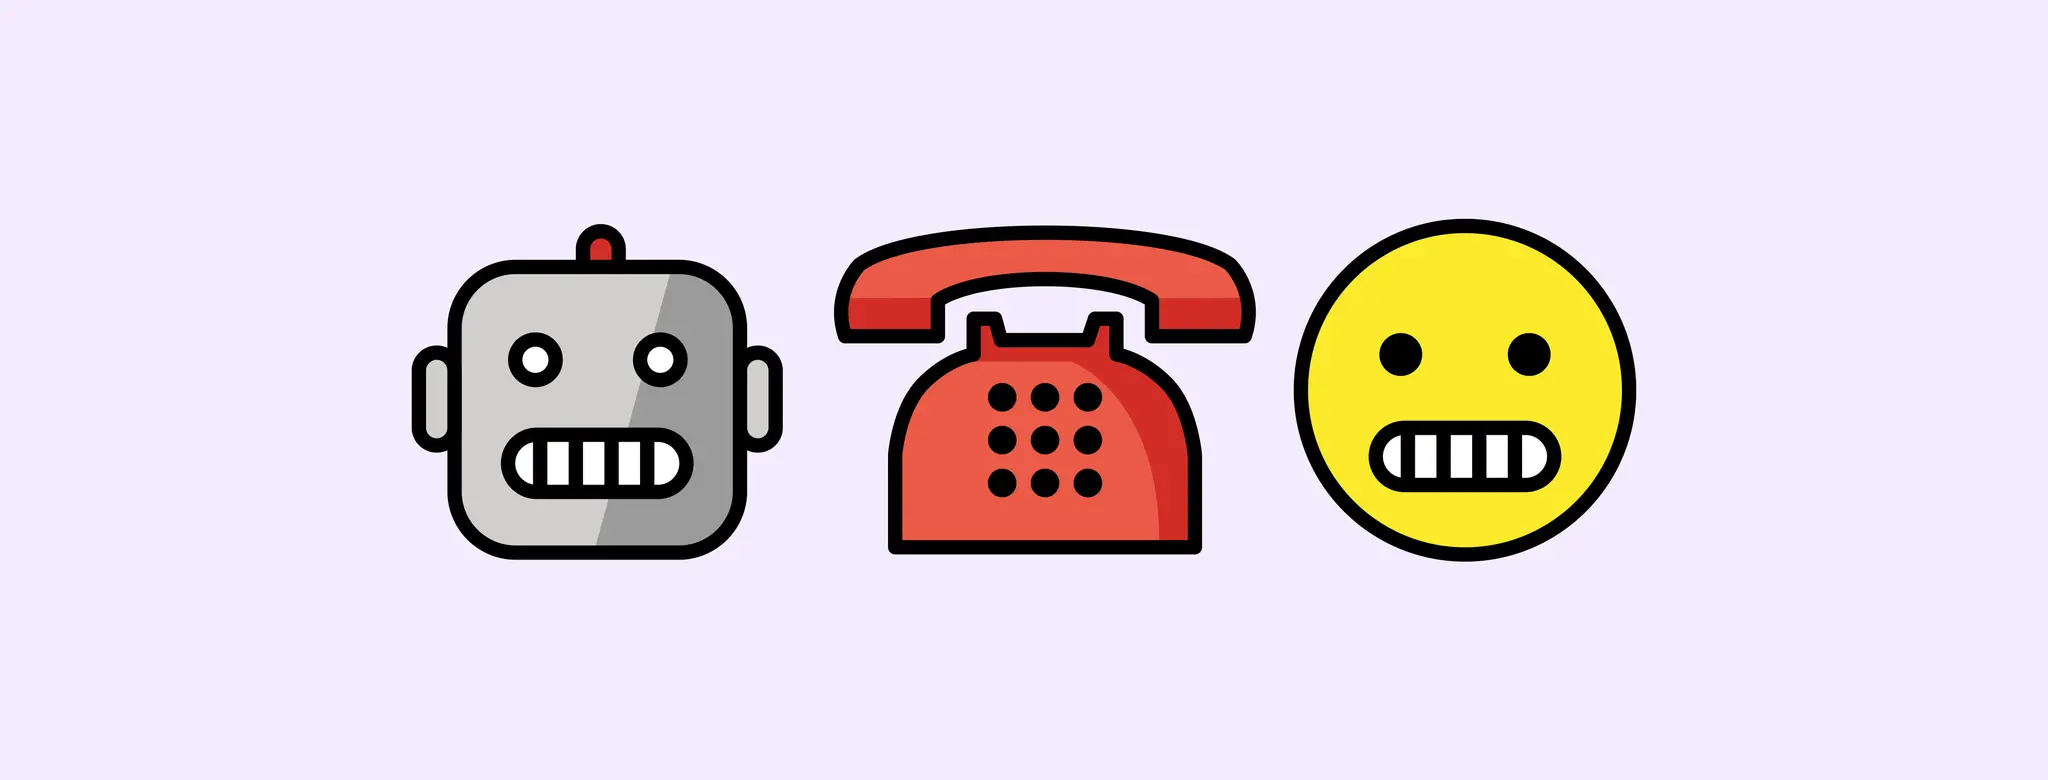 robot phone face emoji